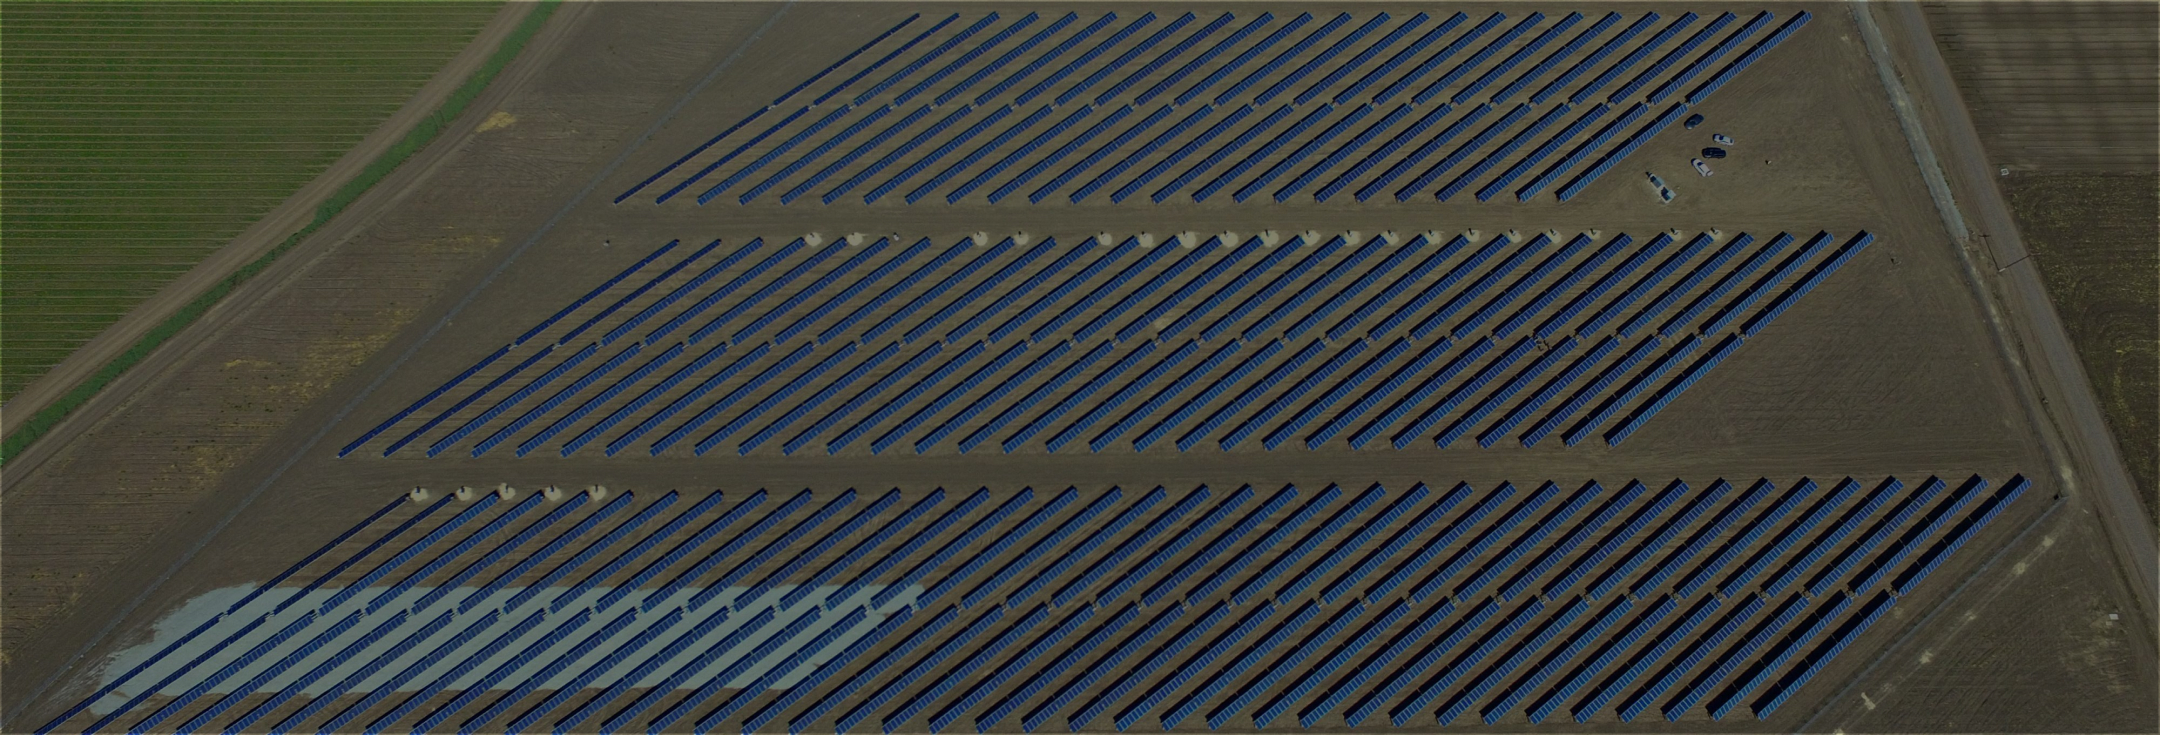 Aerial view of three rows of solar panels on farmland.